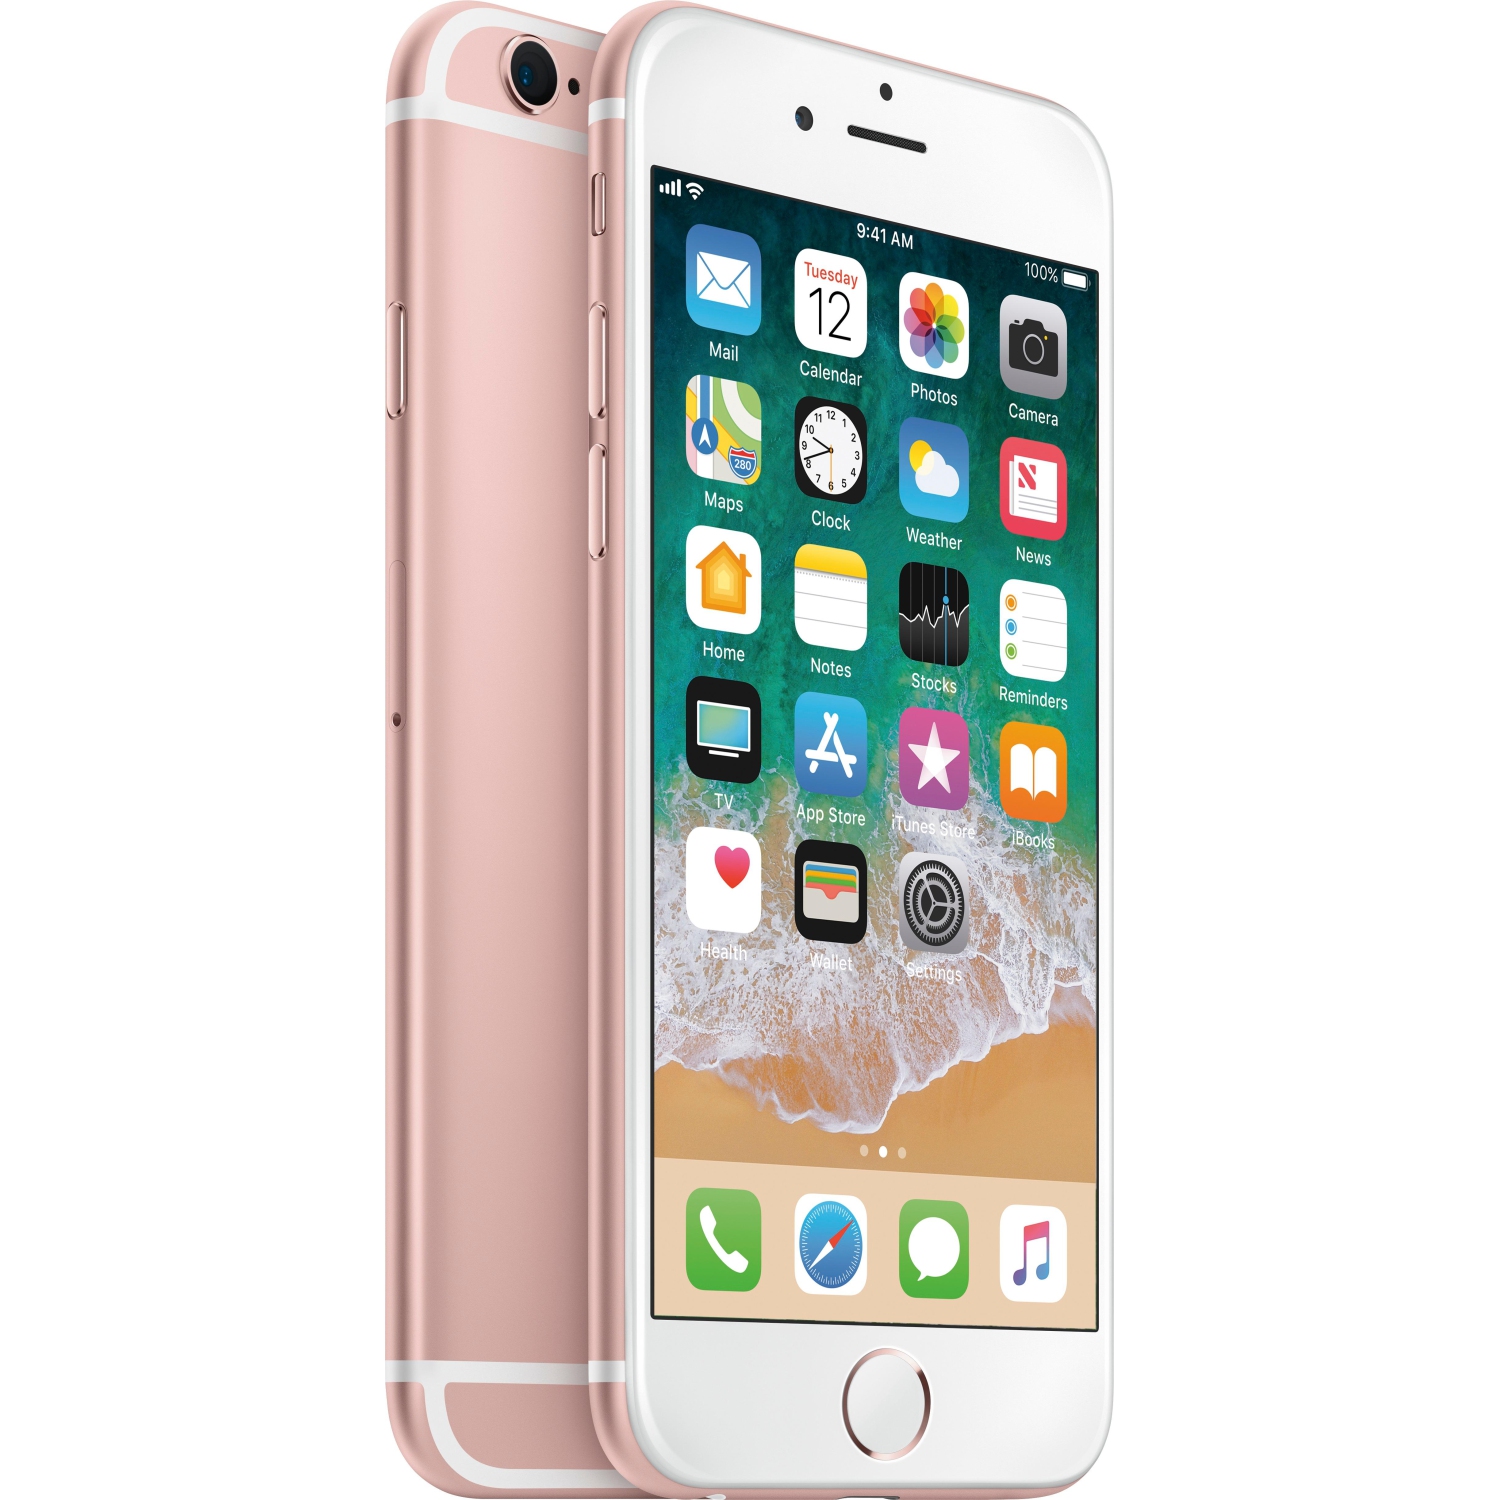 Refurbished (Excellent) - Apple iPhone 6s 32GB Smartphone - Rose Gold - Unlocked - Certified Refurbished